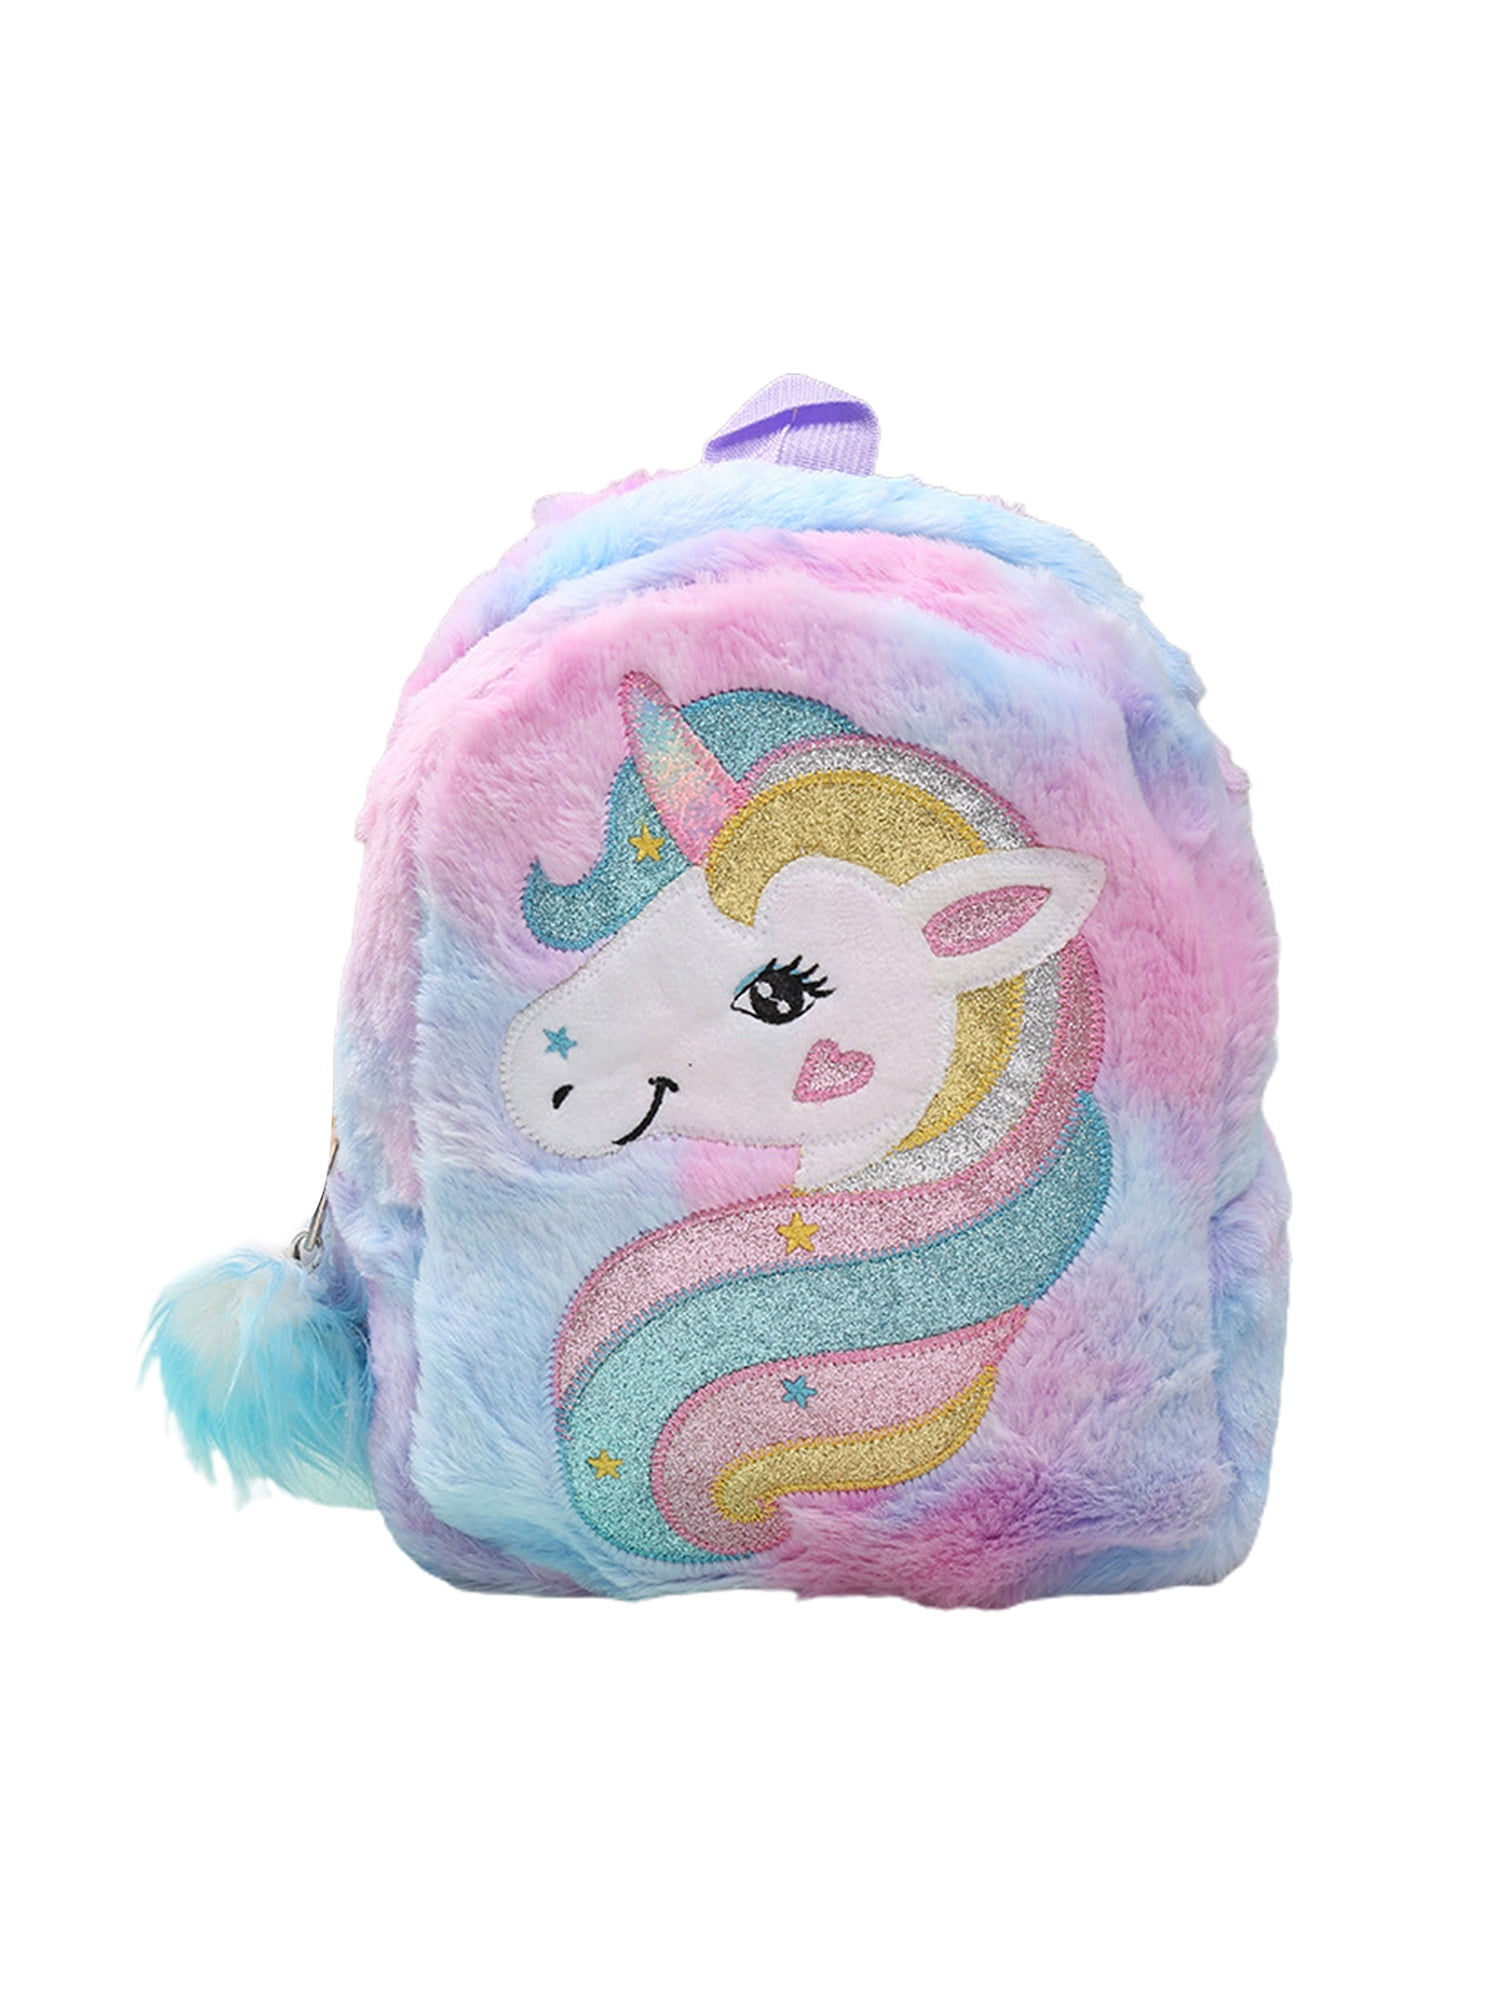 Unicorn plush backpack children's cute cartoon school bag travel leisure bag 